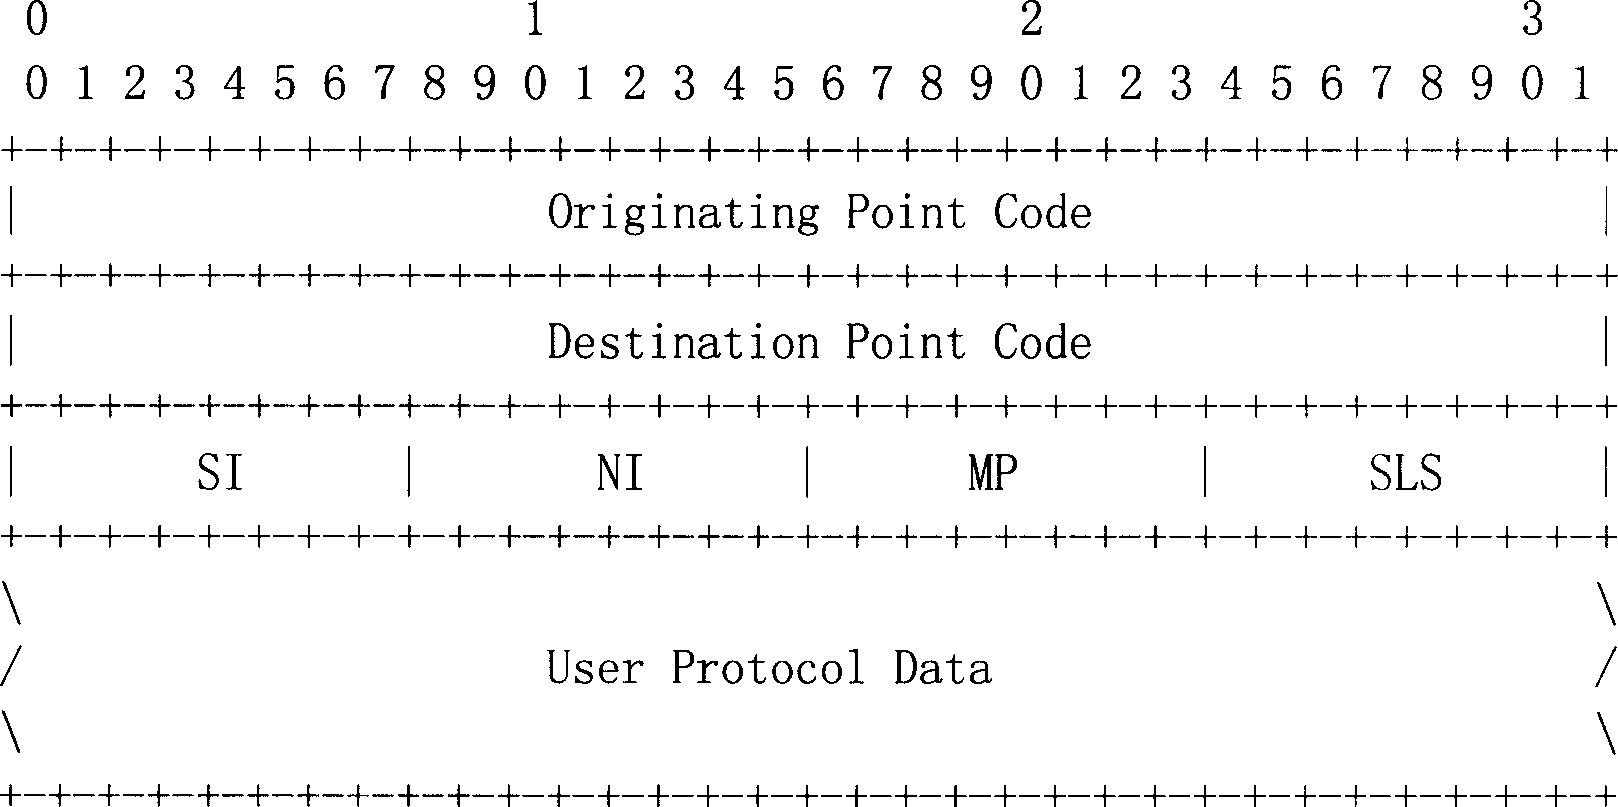 Lossless transparent transmitting method for circuit identification code based on M3UA